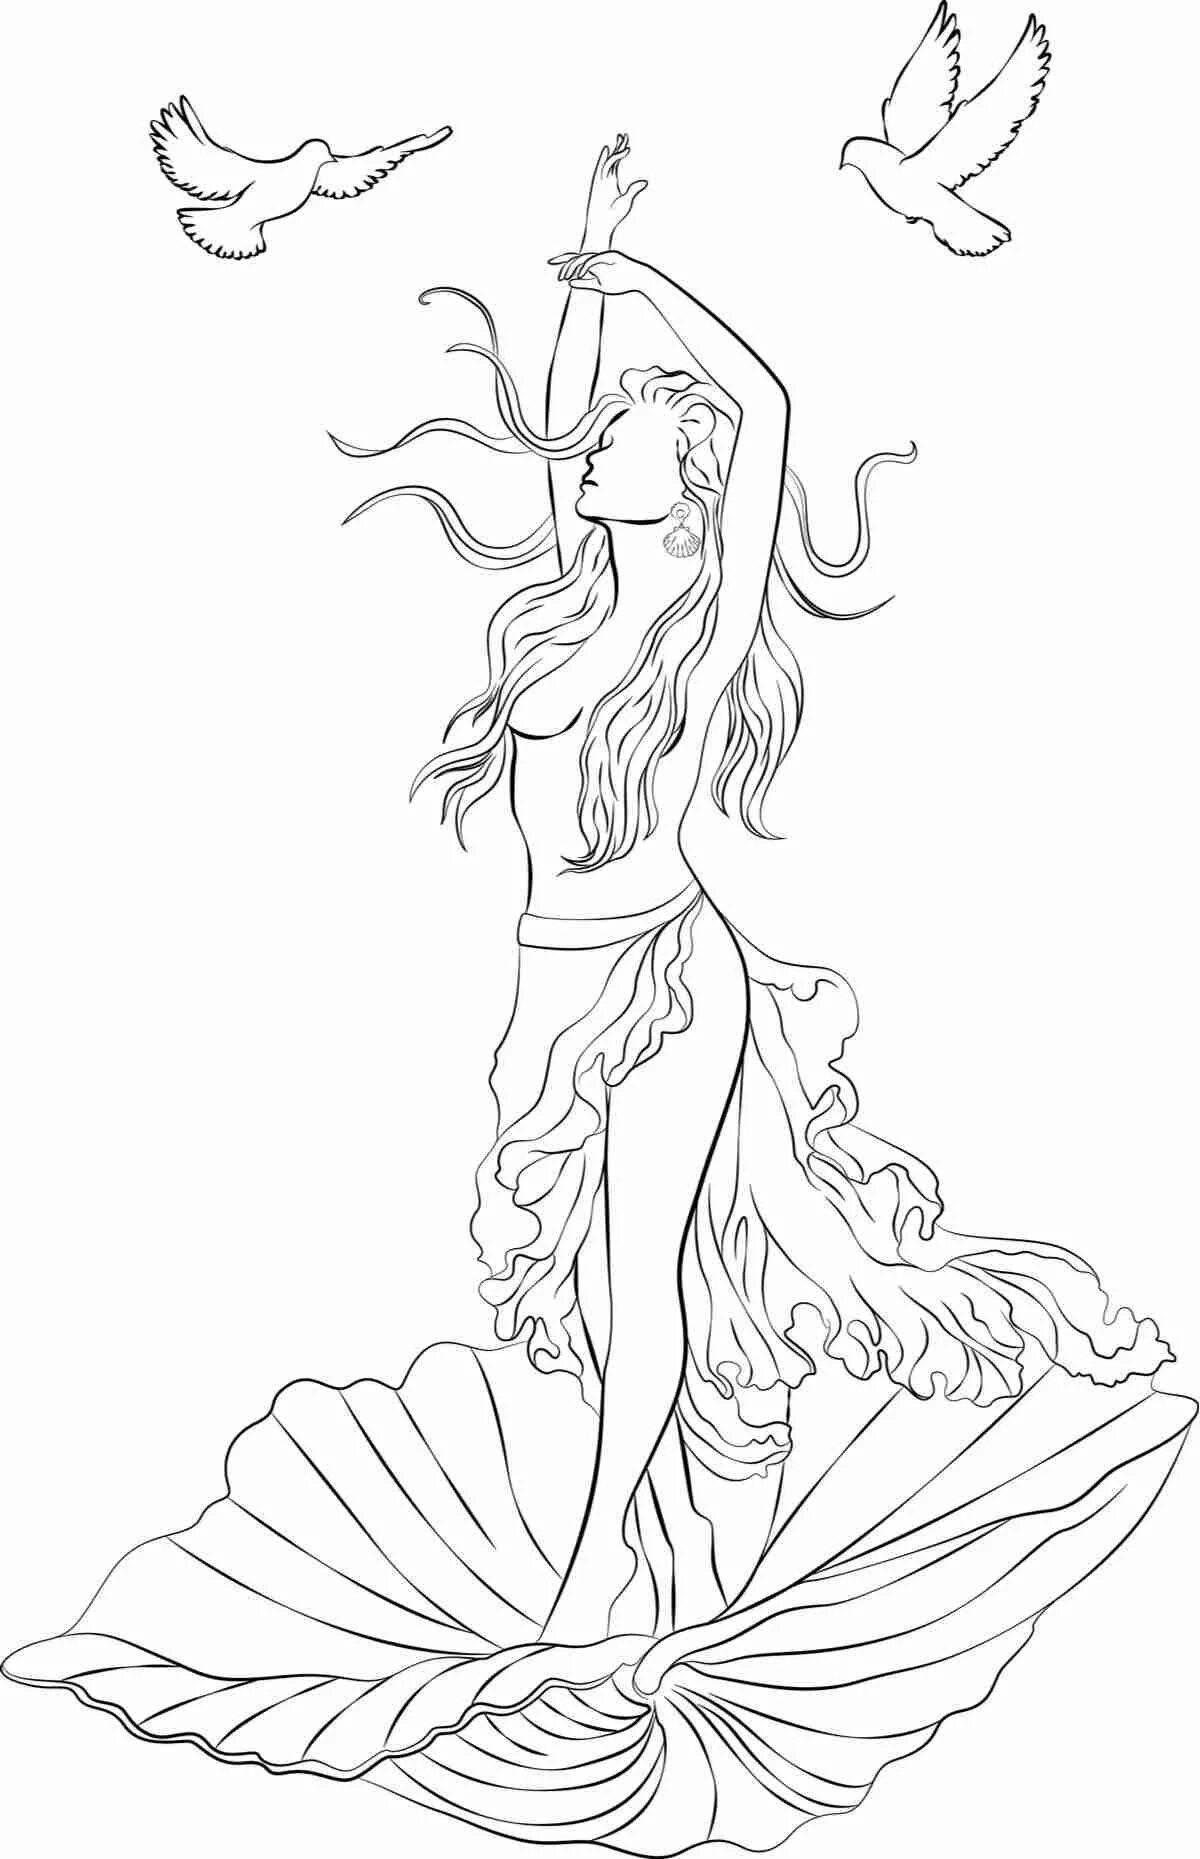 Coloring page royal goddess aphrodite